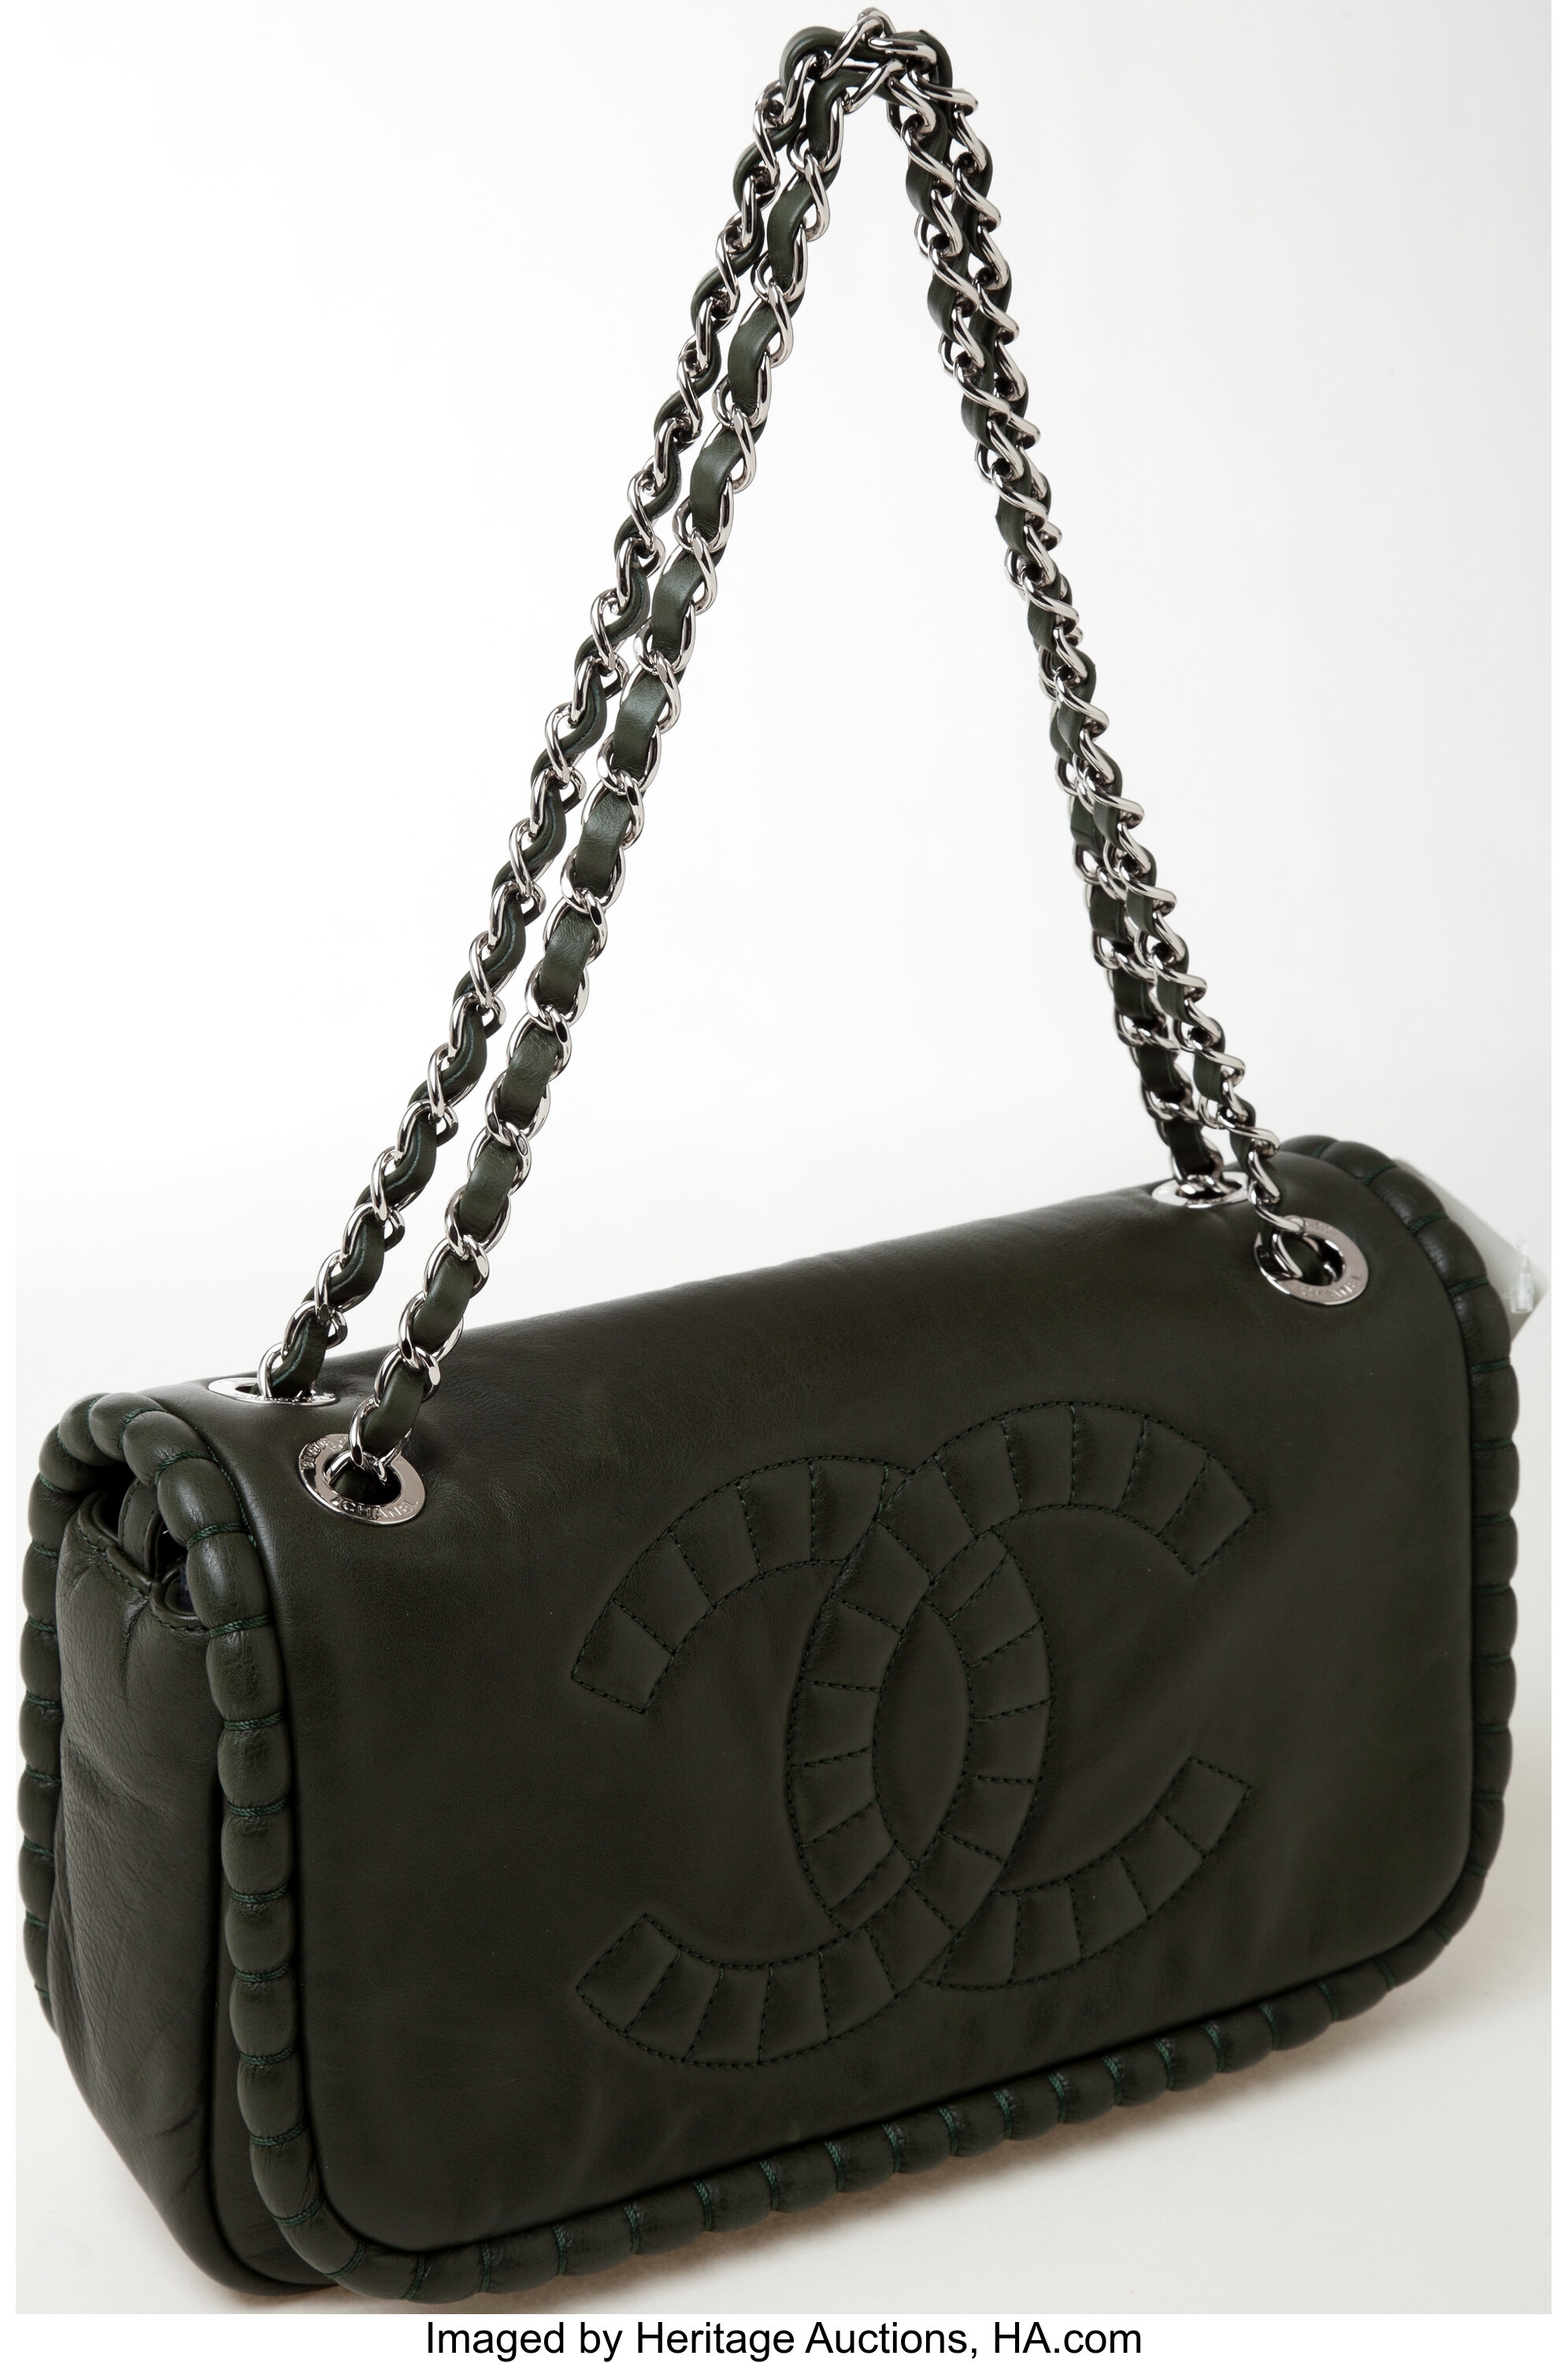 Heritage Vintage: Chanel Dark Green Lambskin Leather CC Flap Bag